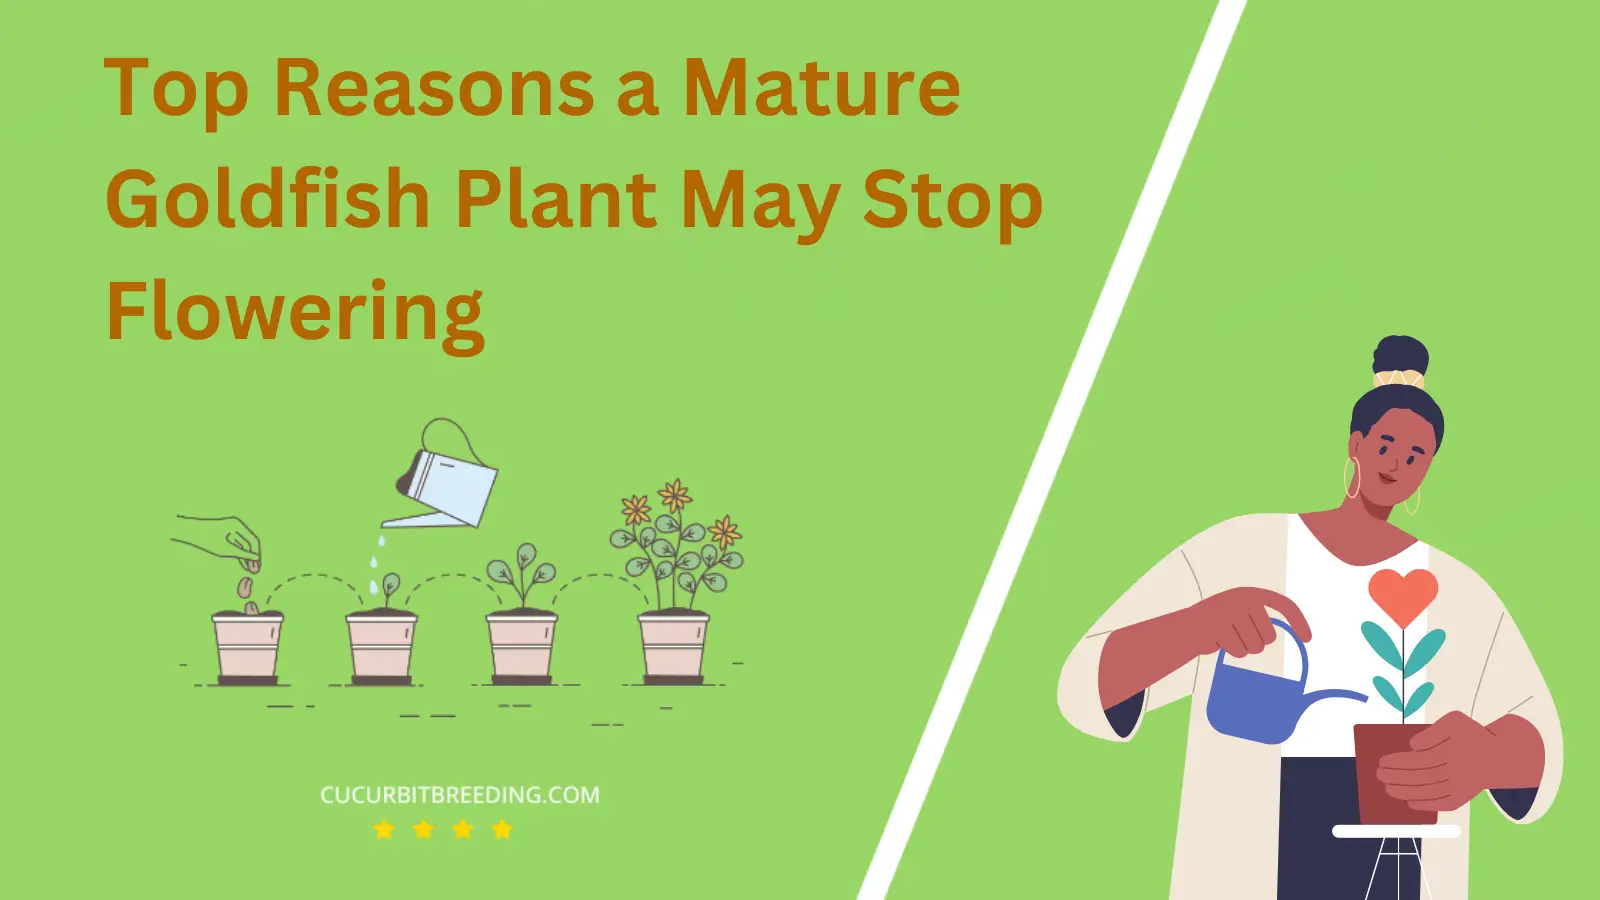 Top Reasons a Mature Goldfish Plant May Stop Flowering